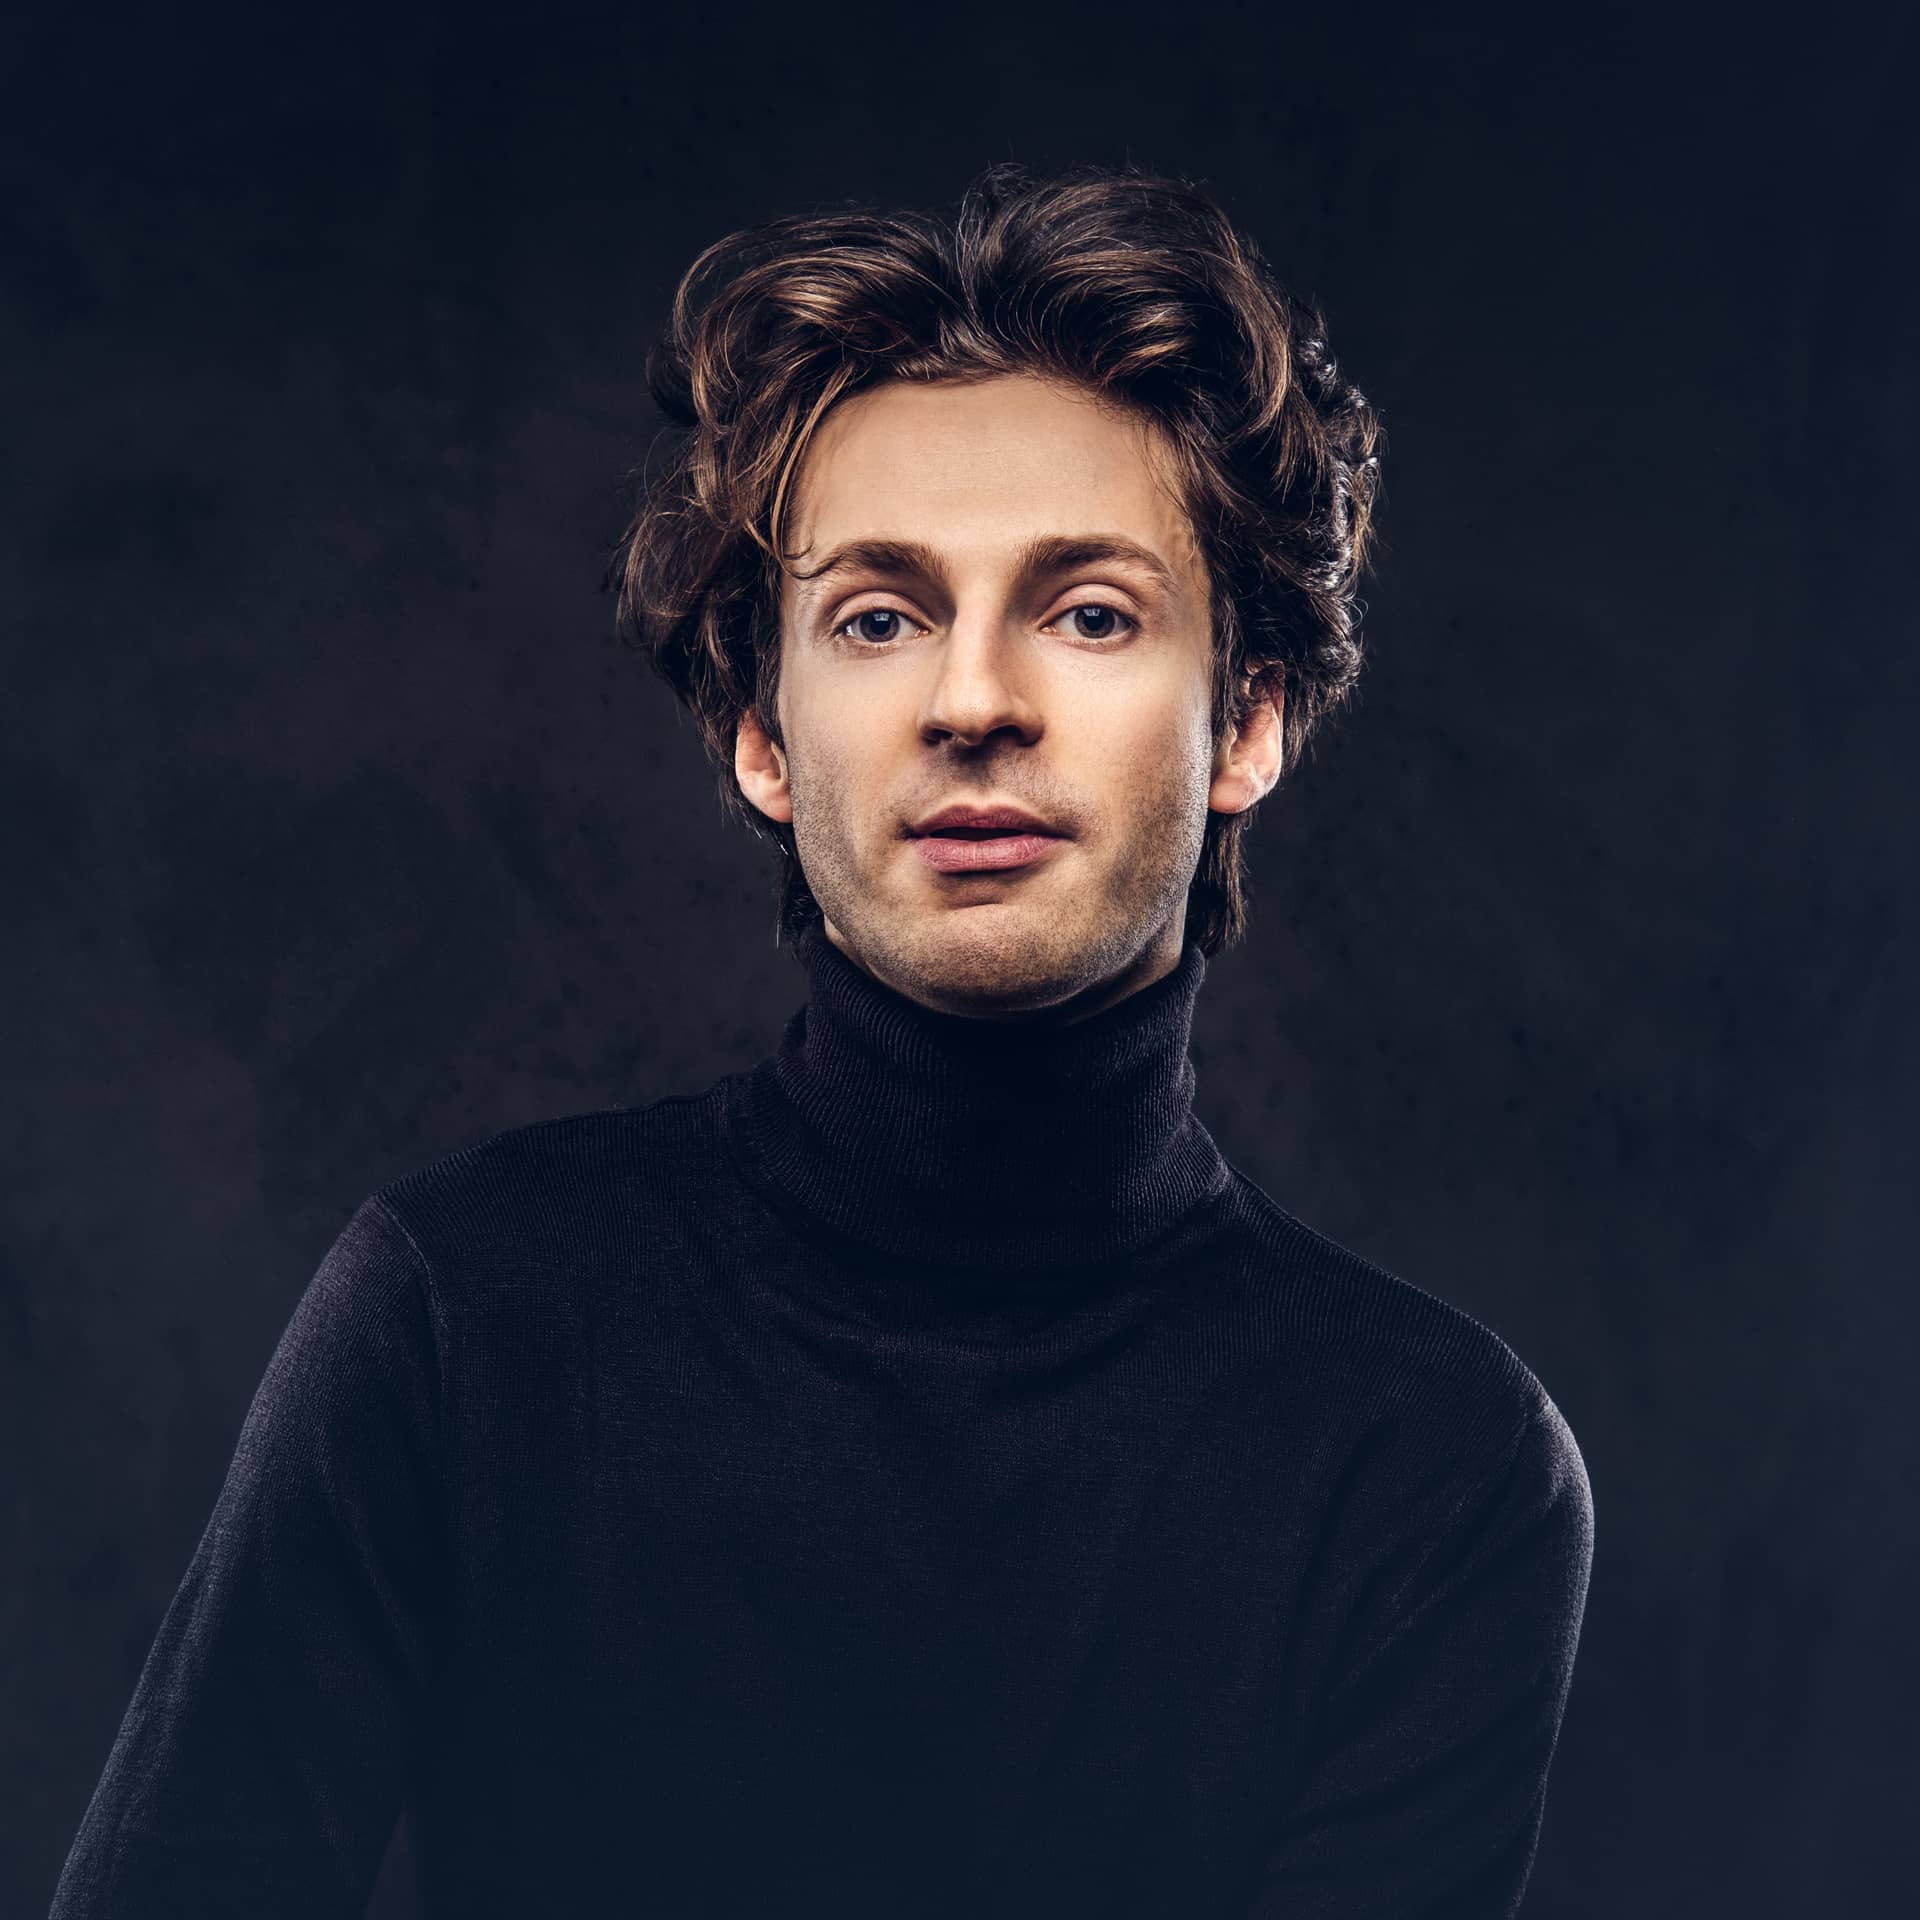 Portrait charismatic sensual male black sweater creative personality image